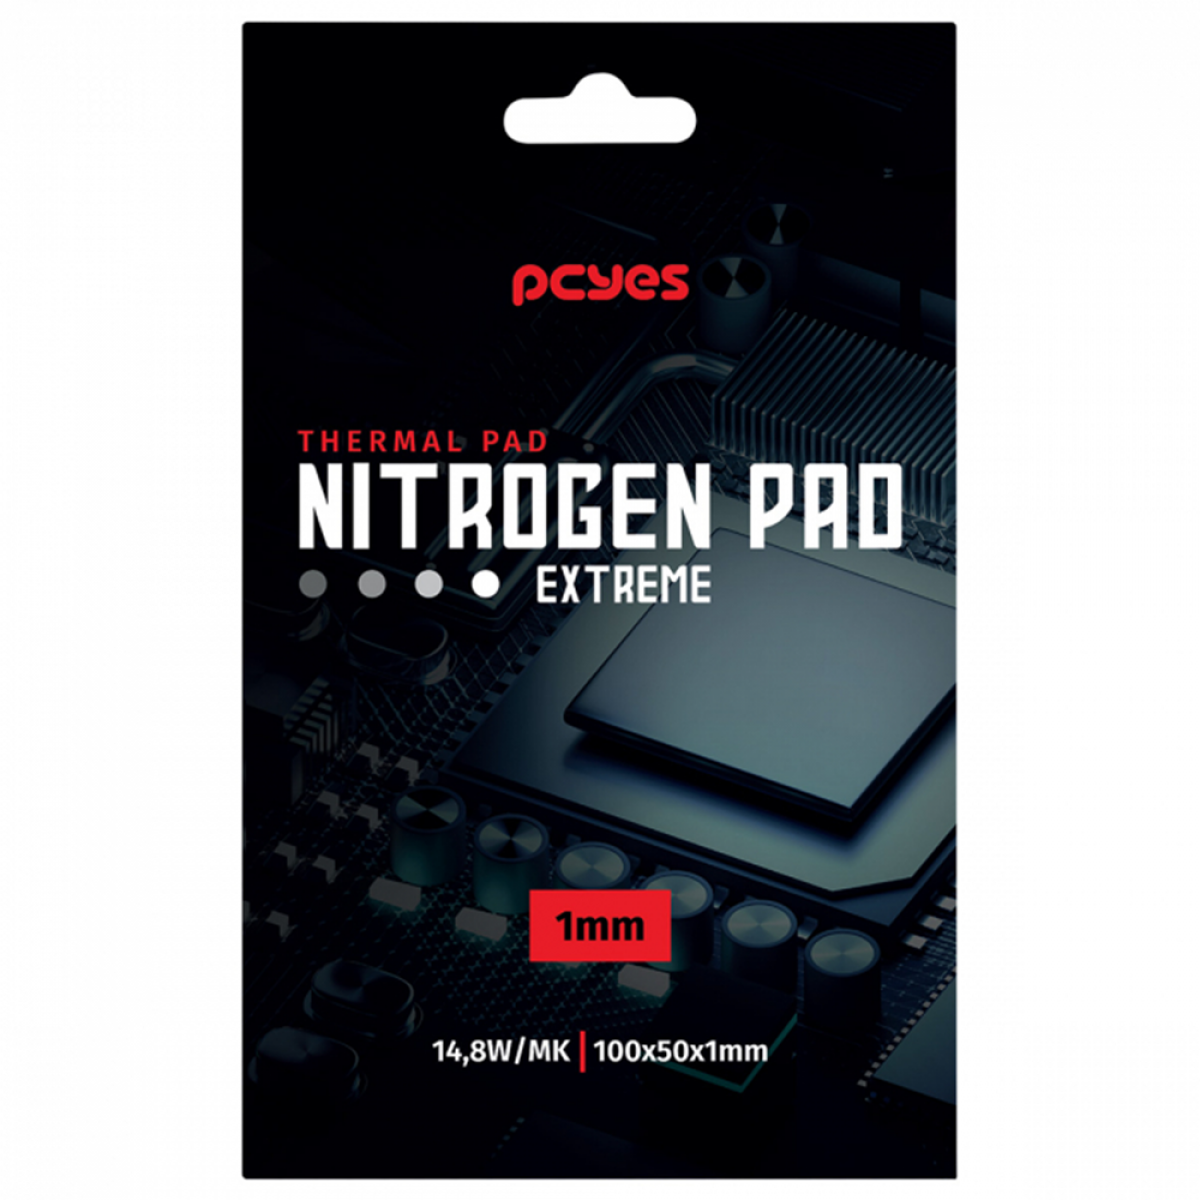 Thermal Pad PCYES Nitrogen Pad Extreme, 100x50x1mm, 14,8W/MK